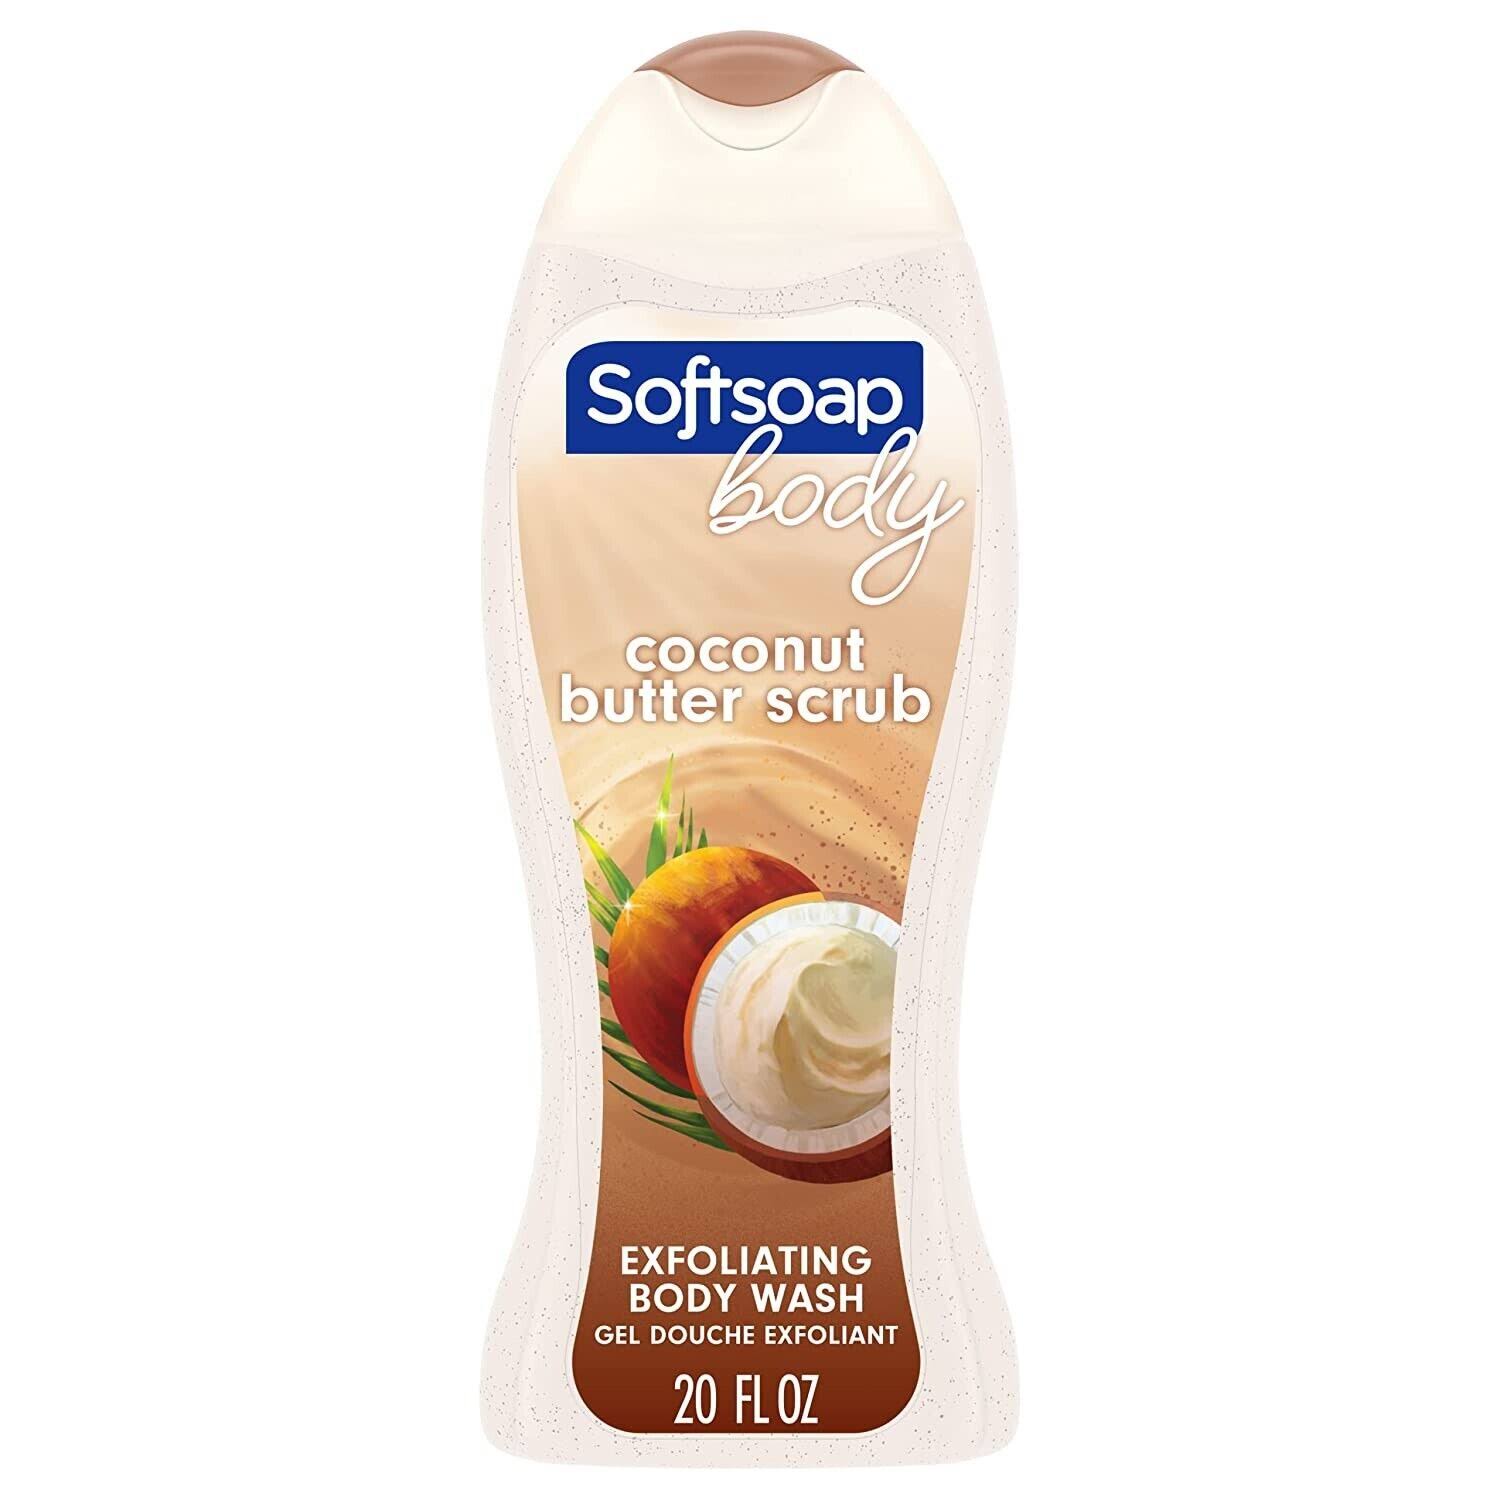 Softsoap Exfoliating Body Wash Coconut Butter Scrub 20 Fl oz